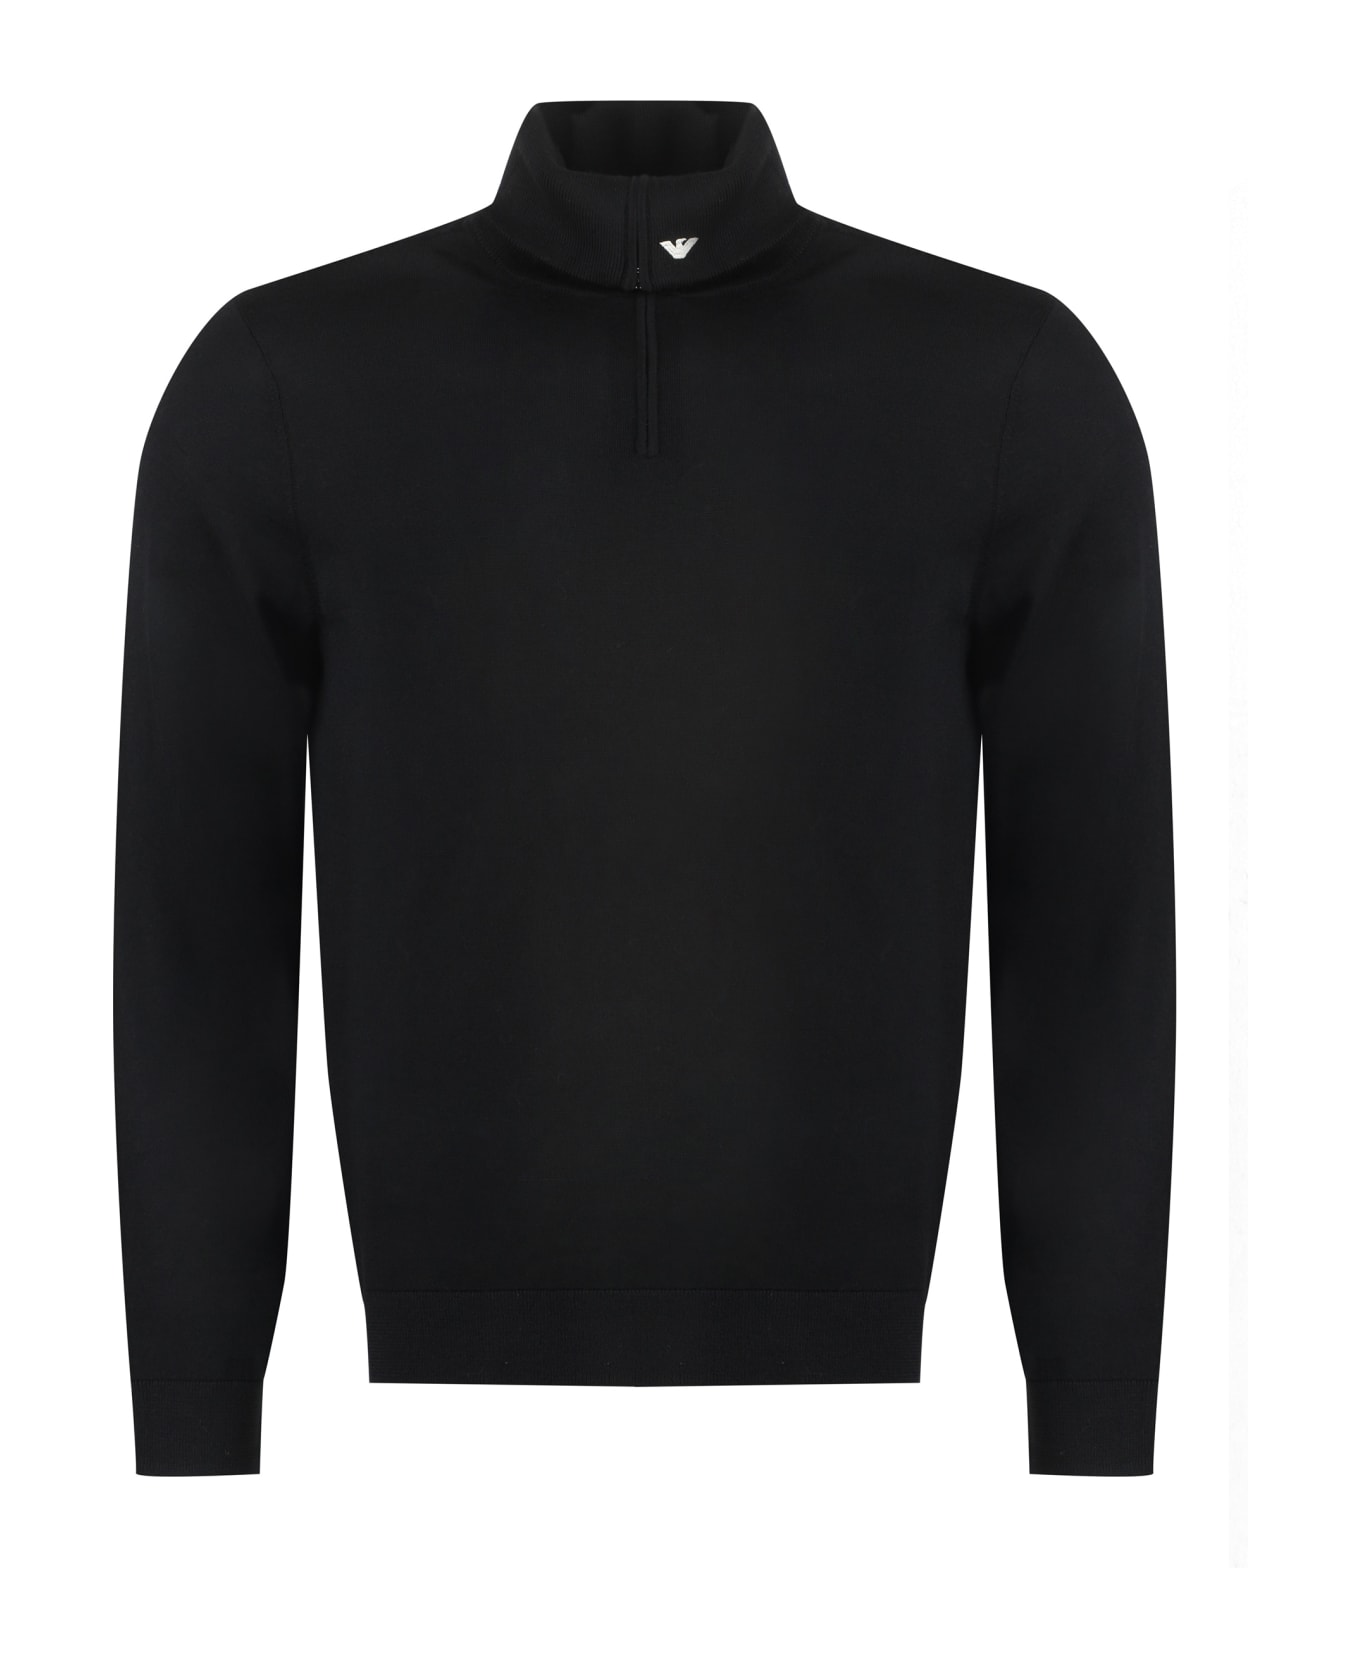 Emporio Armani Virgin Wool Turtleneck Sweater - black